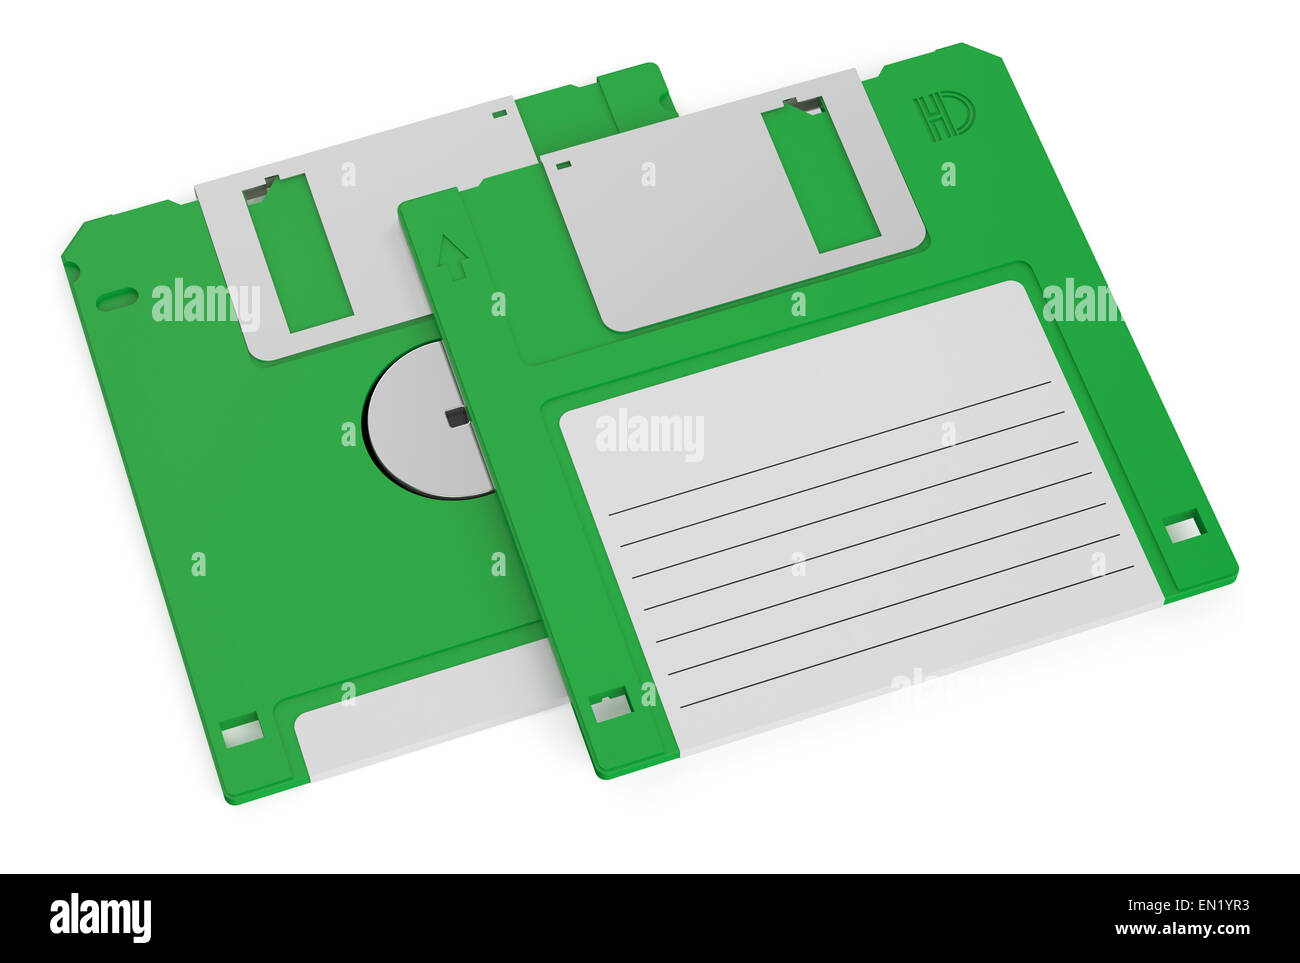 green floppy disks isolated on white background Stock Photo